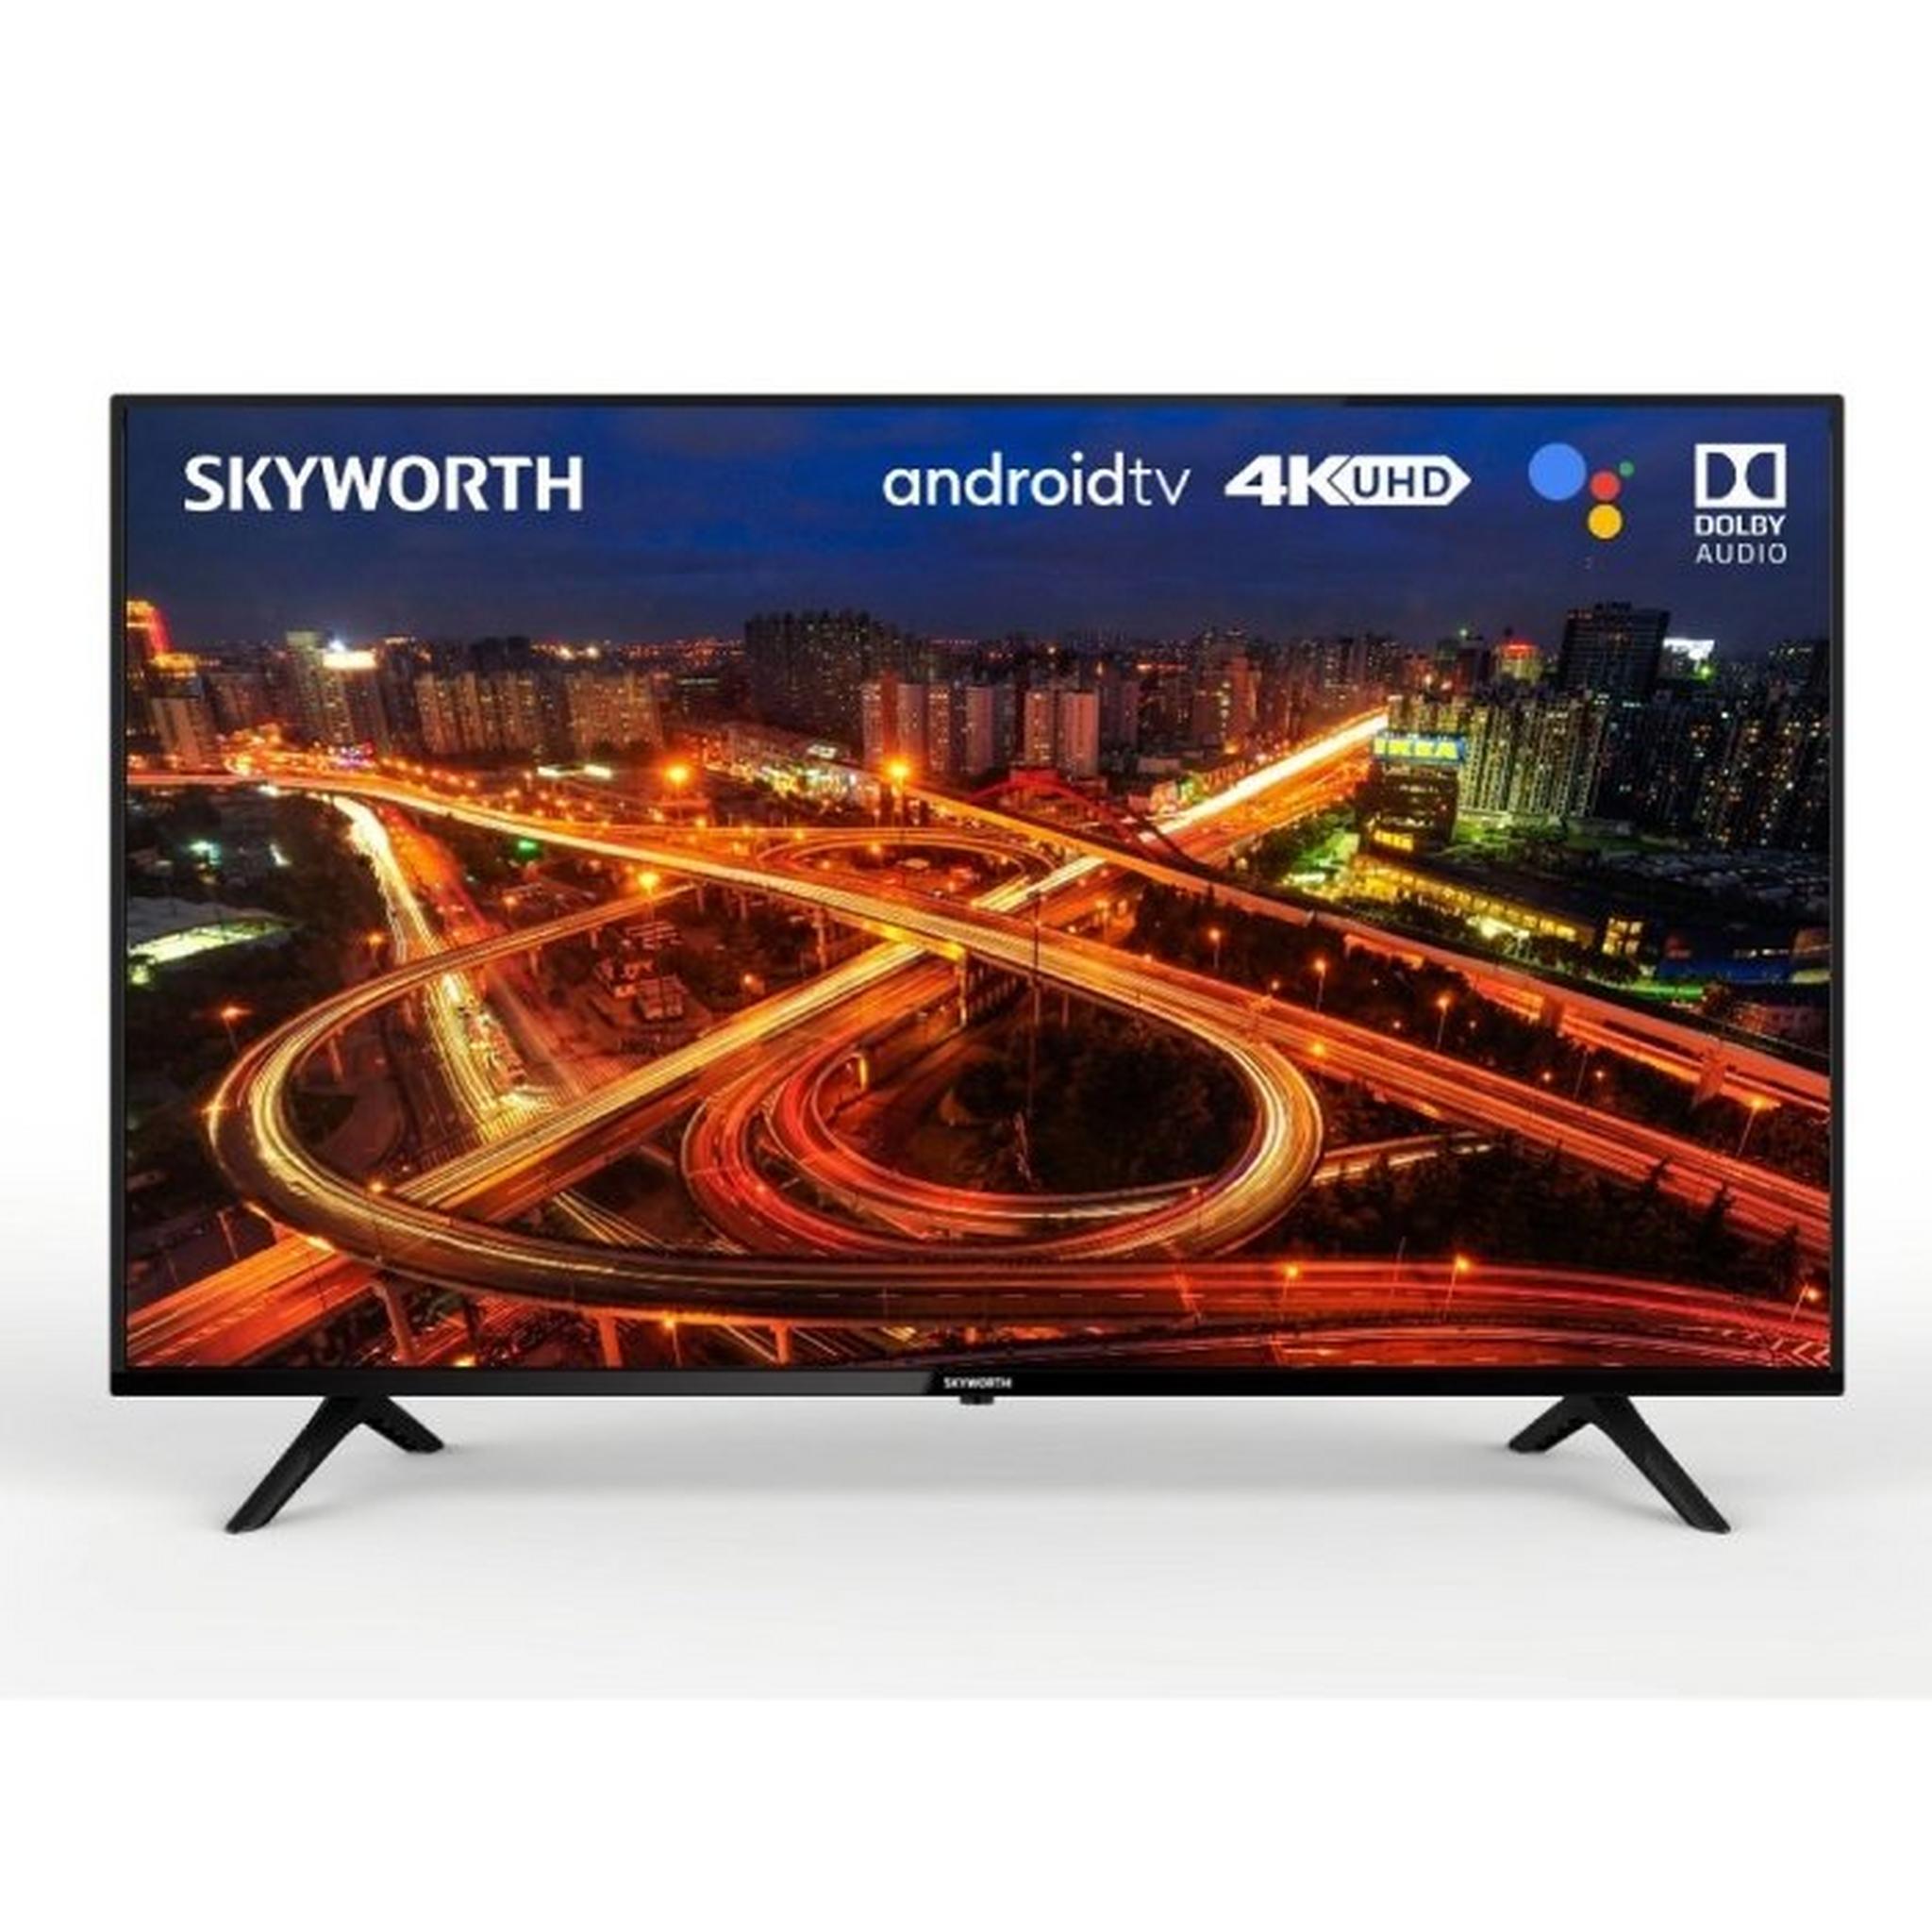 Skyworth 55-inch 4K UHD Android LED TV - (55UC5500)